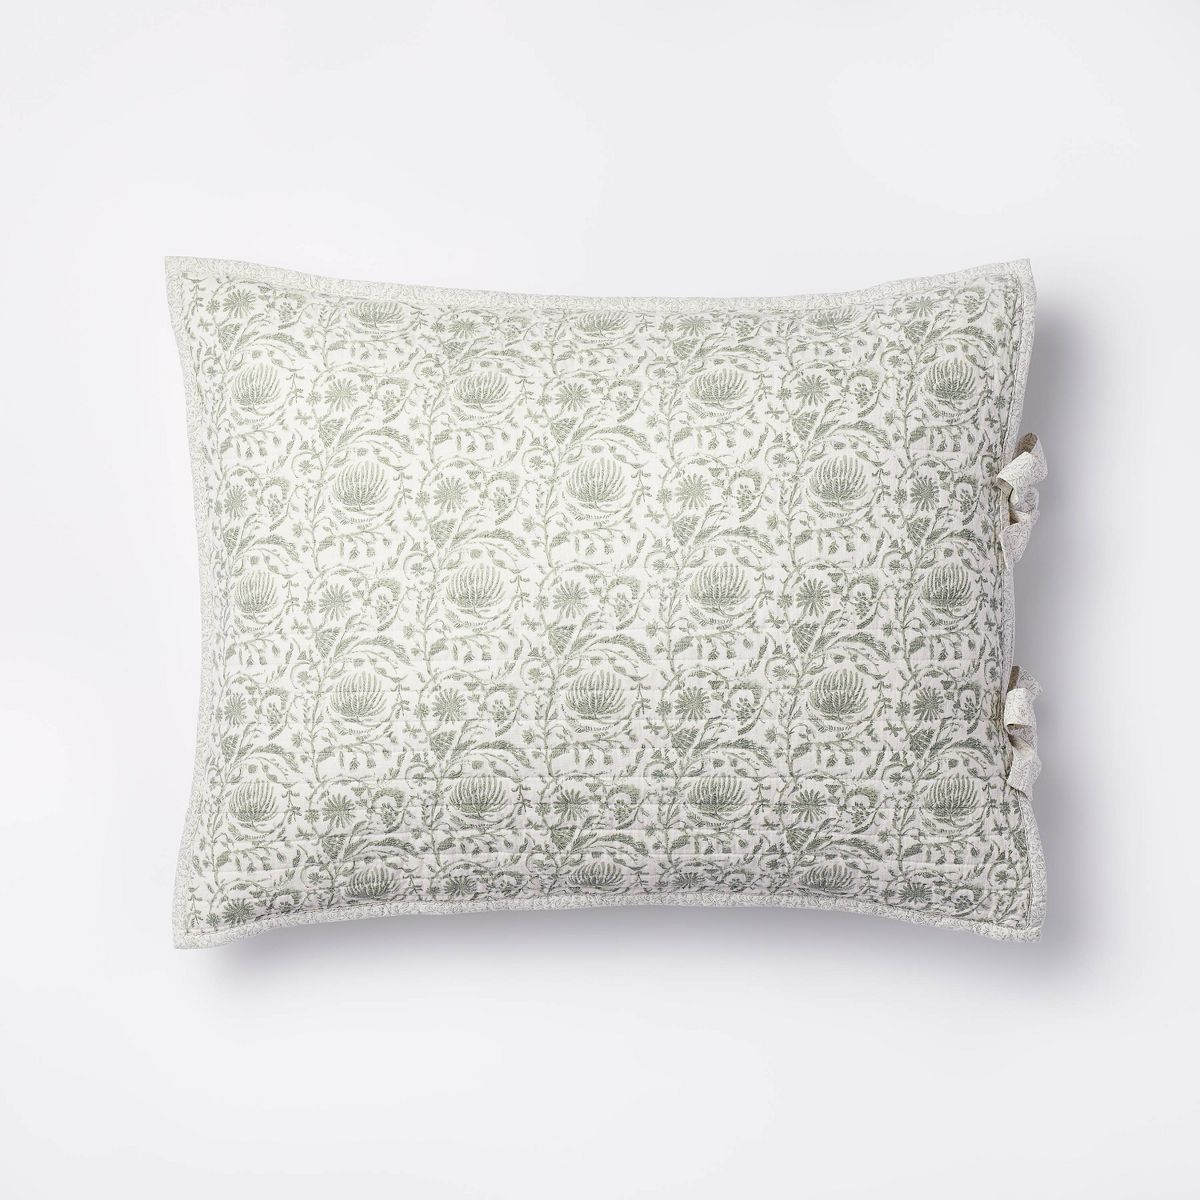 Standard Decorative Border Cotton Slub Print Quilt Sham Light Teal Green – Threshold™ designe... | Target